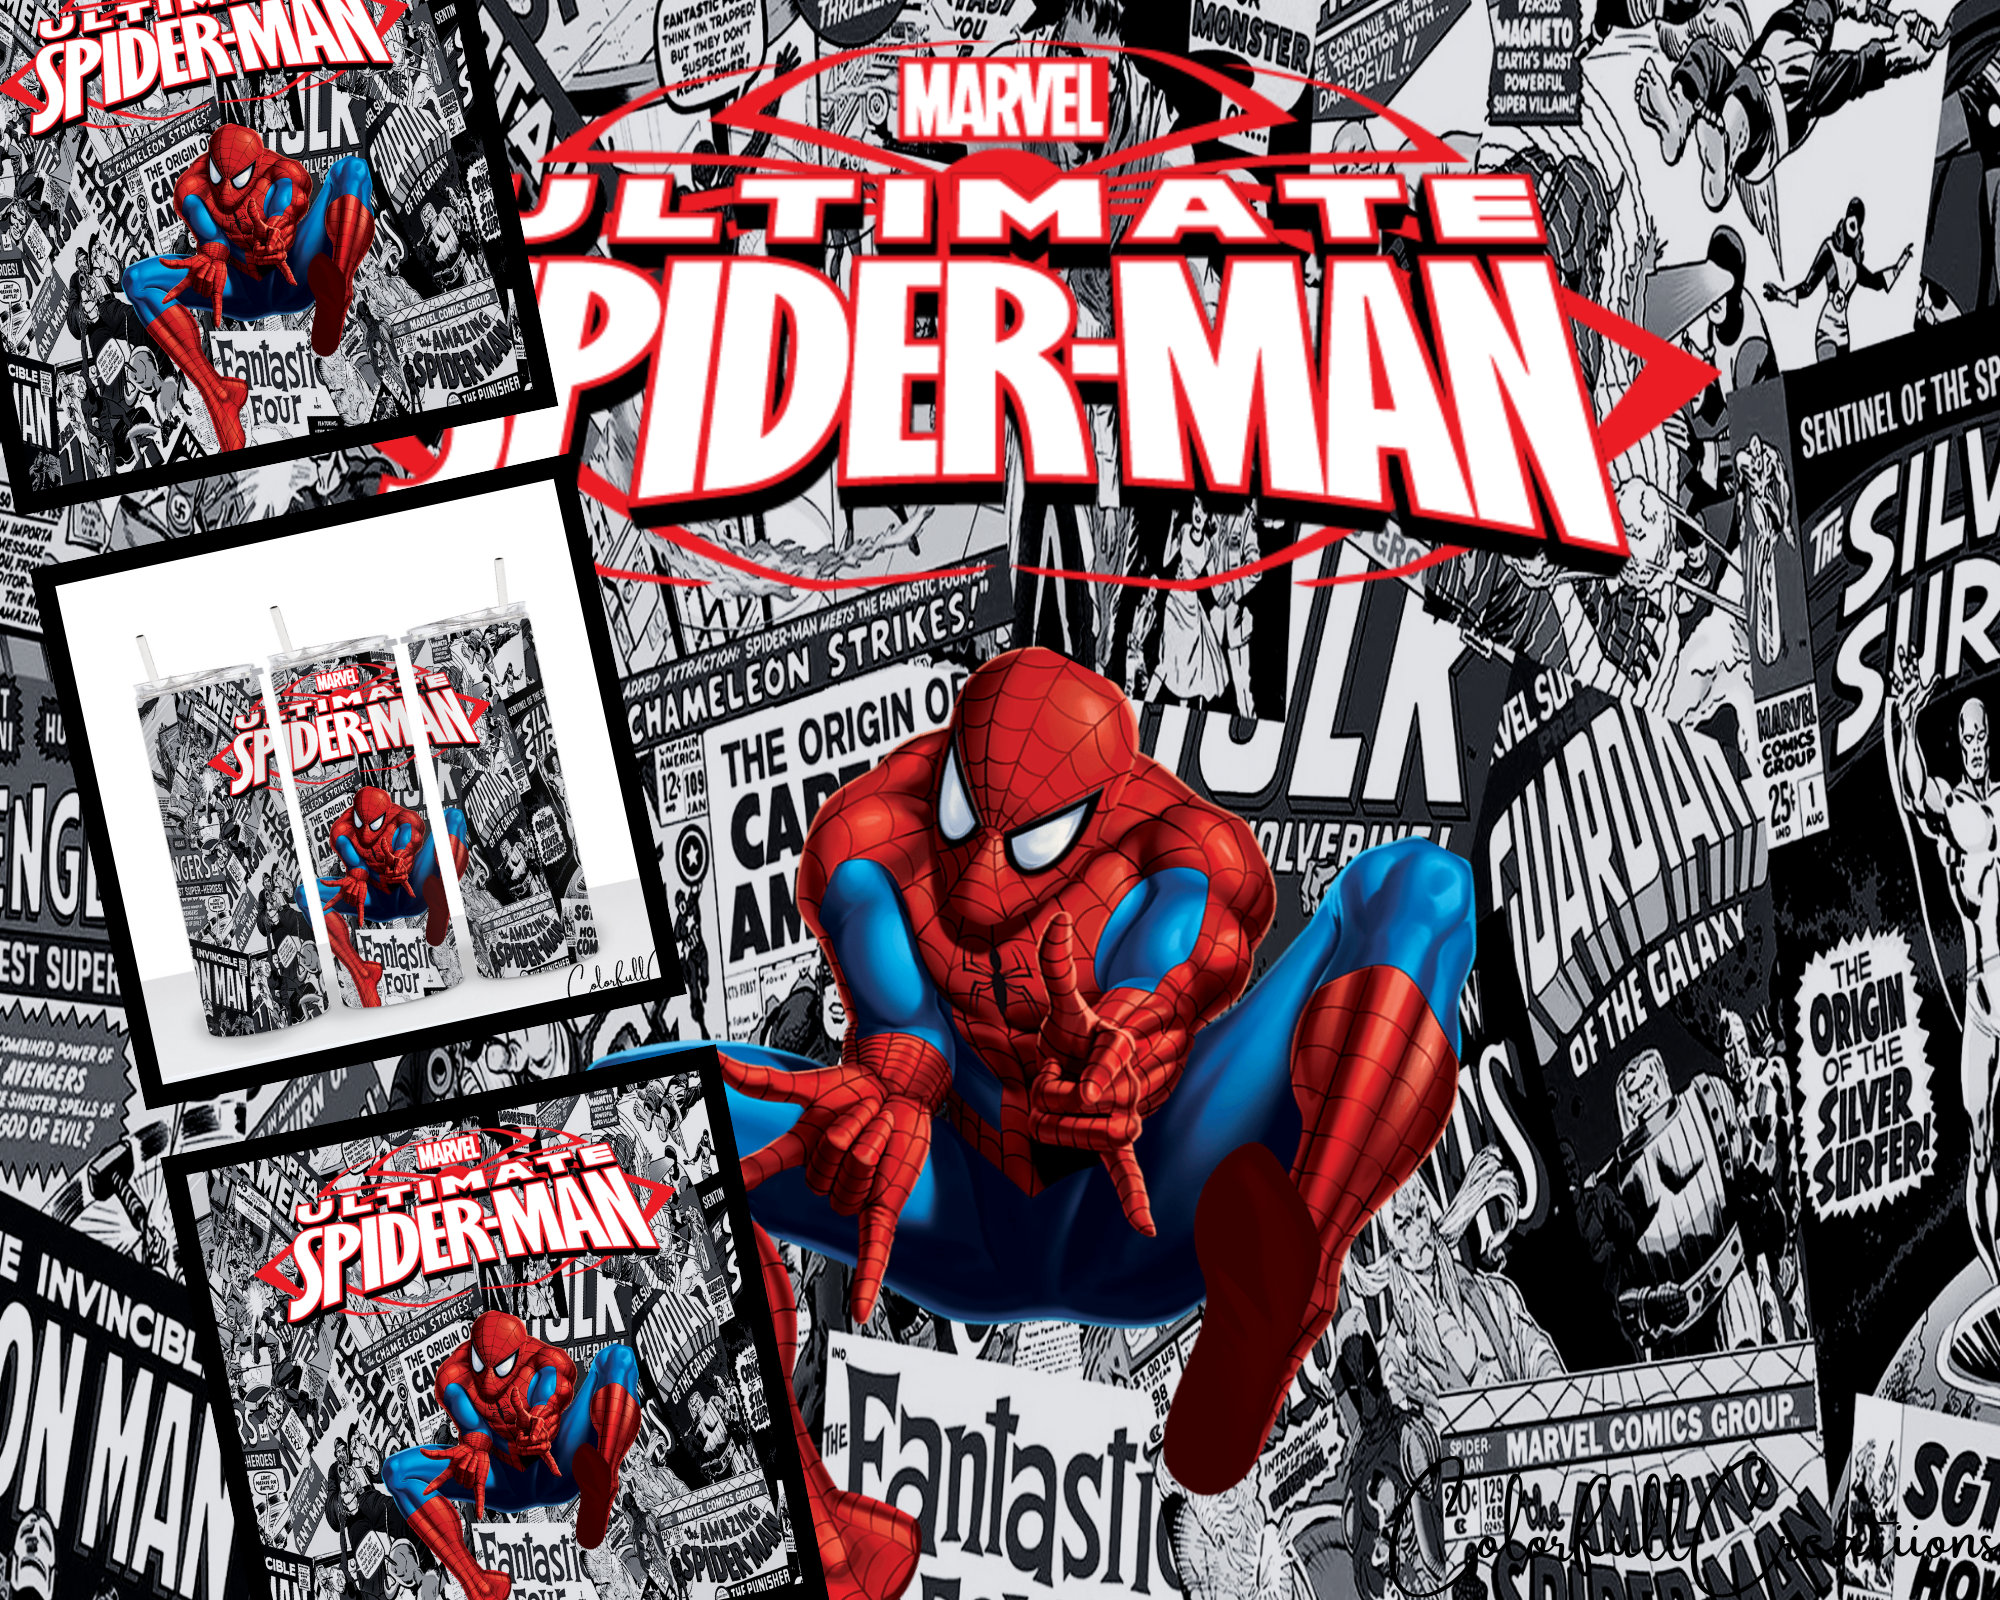 Cartoon Spiderman Tumbler Wrap Sublimation Design PNG 20oz Skinny